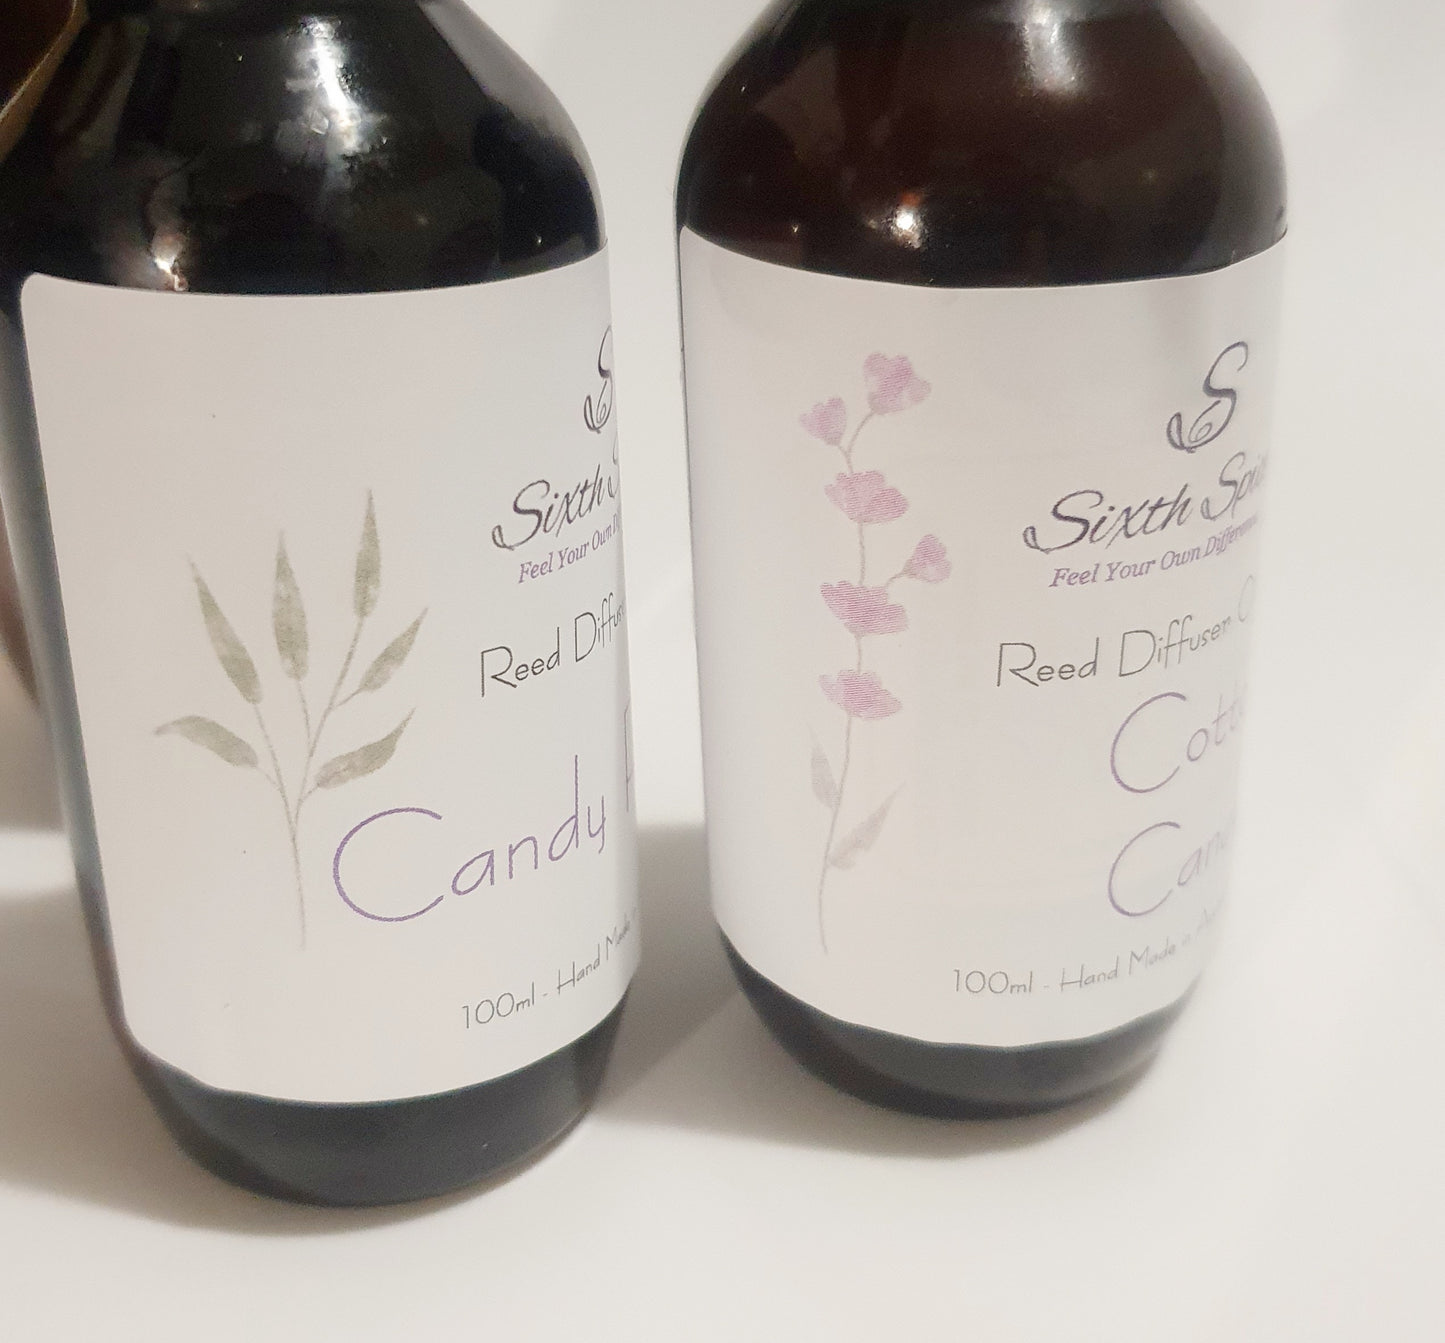 Diffuser refill scent bottles